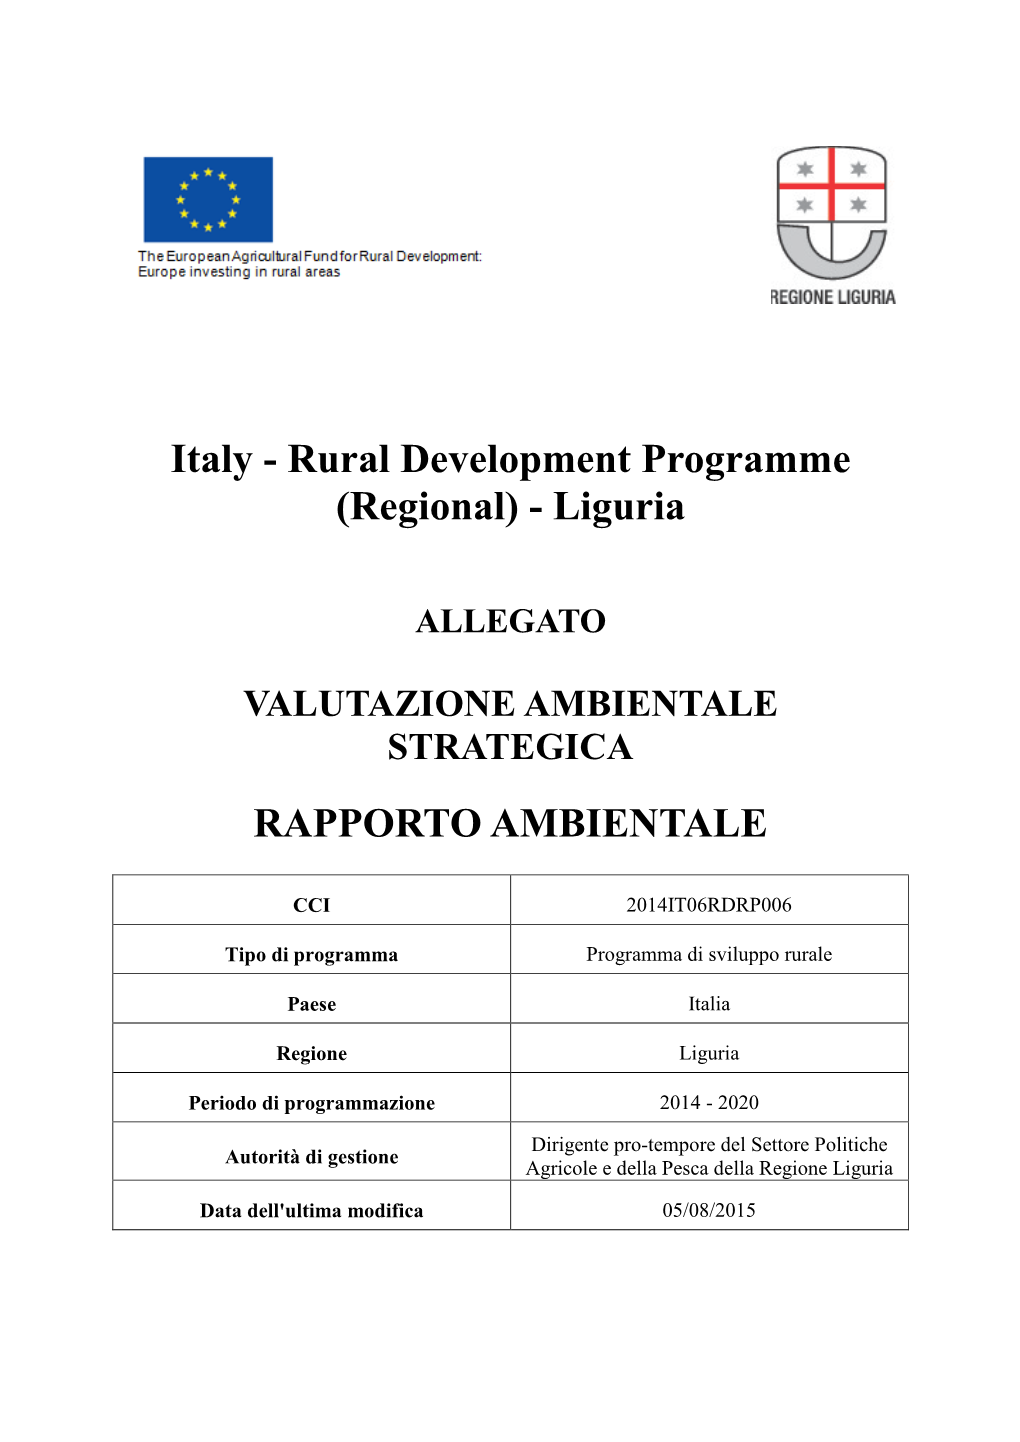 Italy - Rural Development Programme (Regional) - Liguria